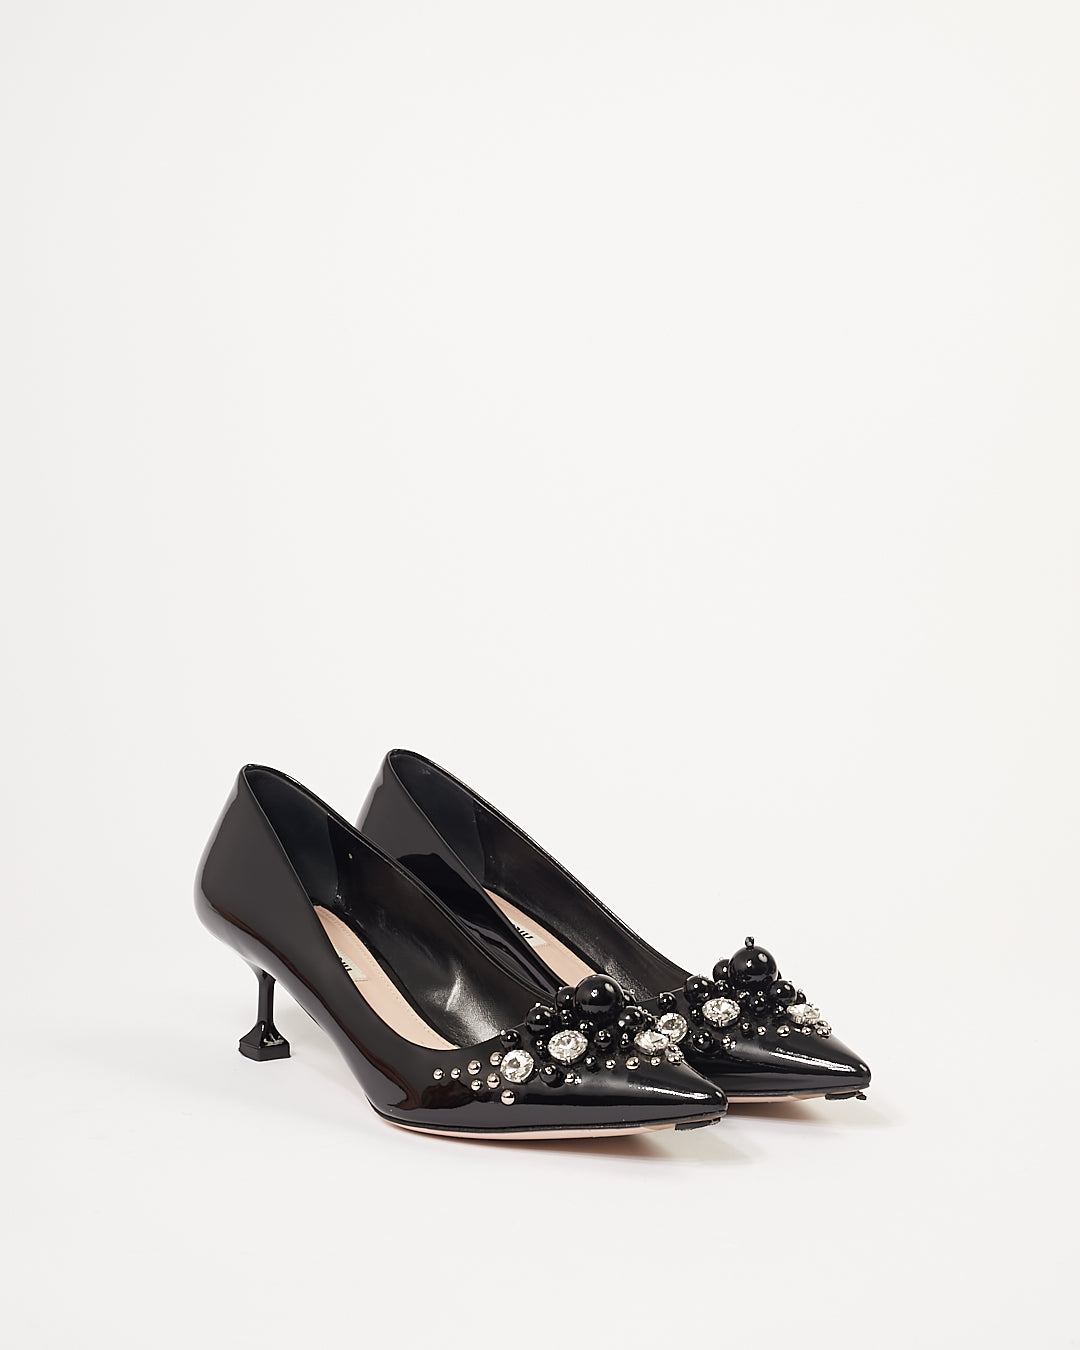 Miu Miu Black Patent Leather Pearl & Crystal Embellished Pointed Toe Kitten Heel Pumps - 39